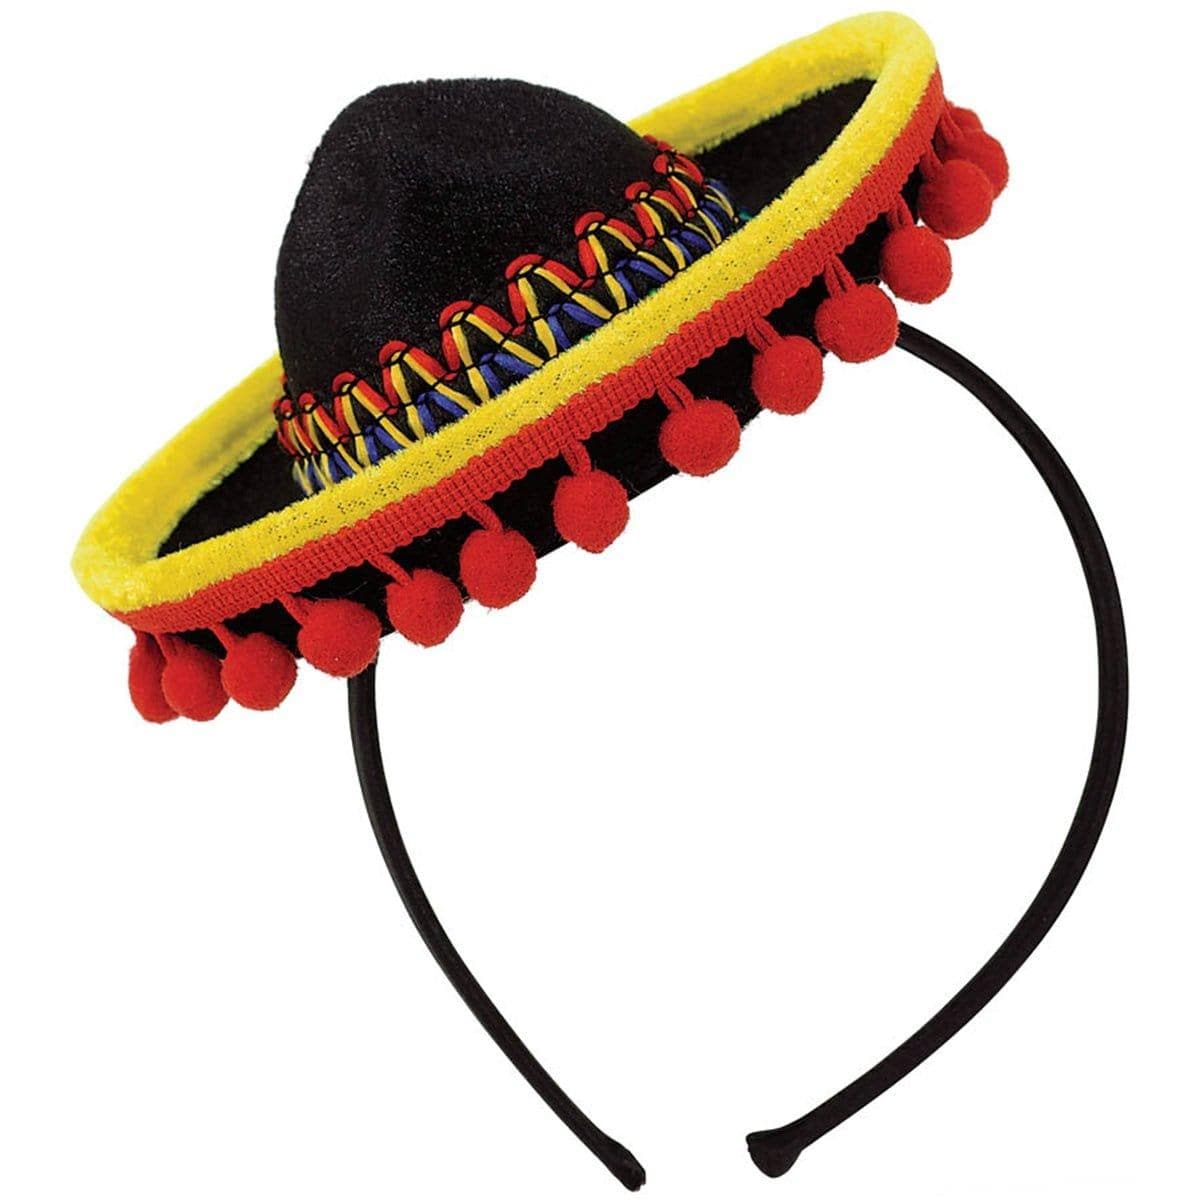 Buy Theme Party Sombrero Headband sold at Party Expert